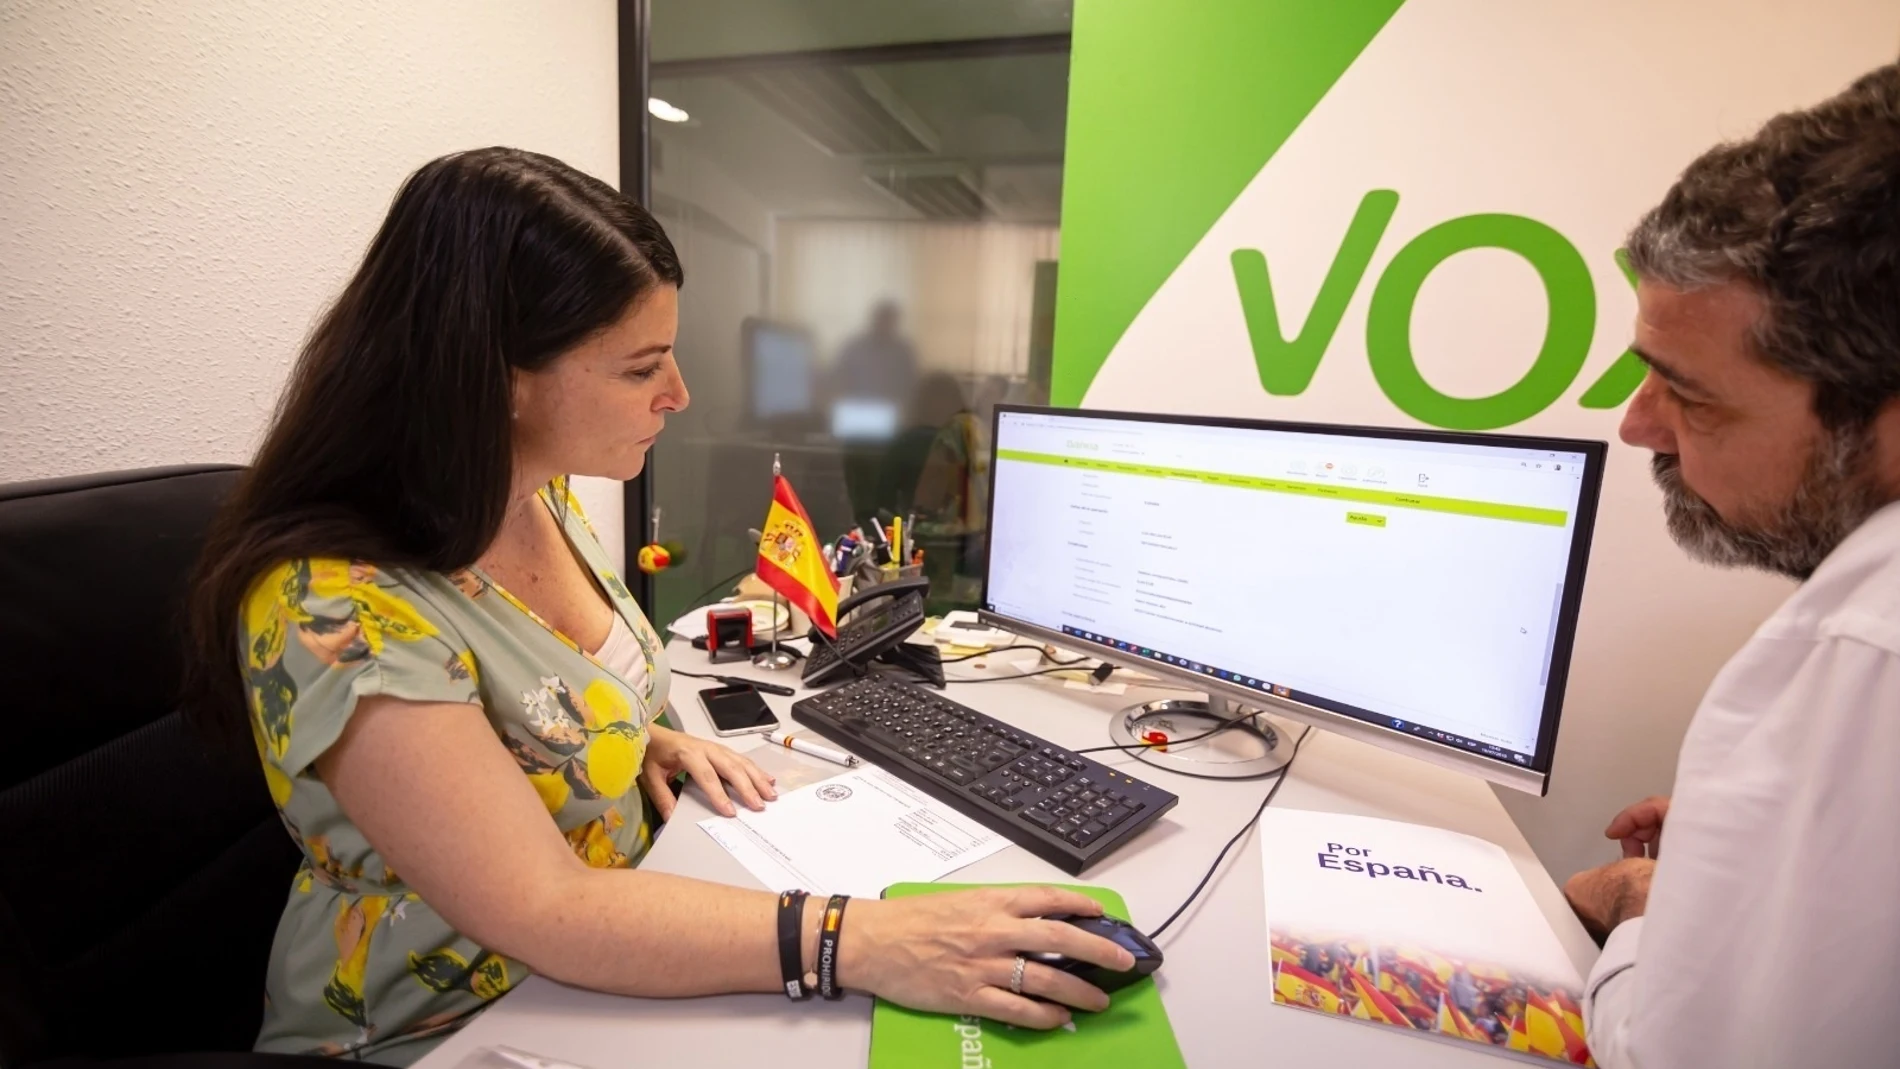 La secretaria general del grupo parlamentario Vox, Macarena Olona, realiza la transferencia / La Razón